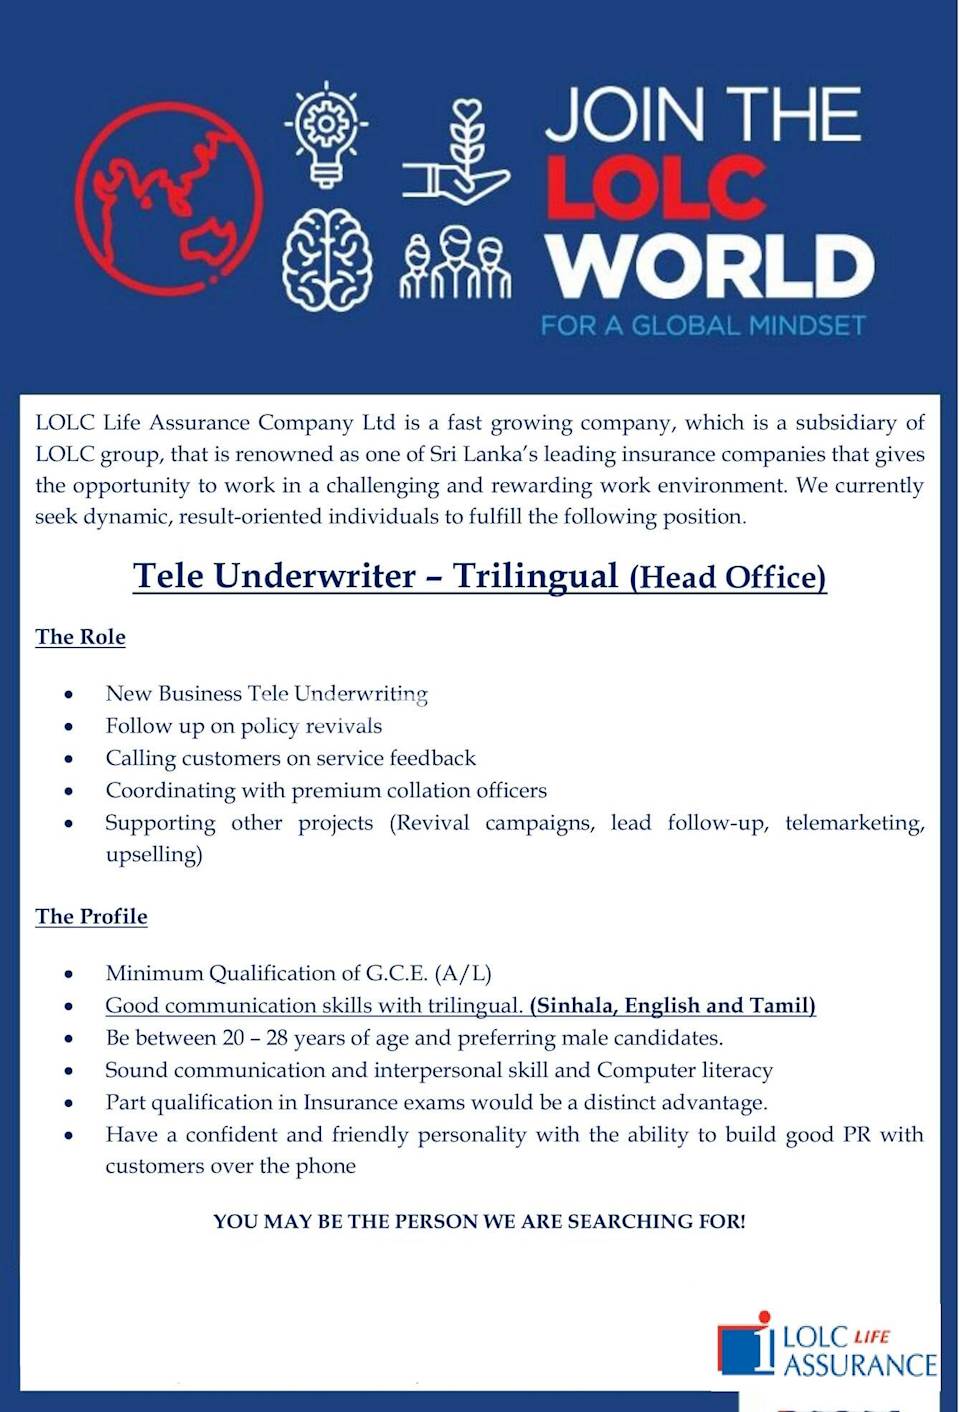 Tele Underwriter - Trilingual (Head Office)